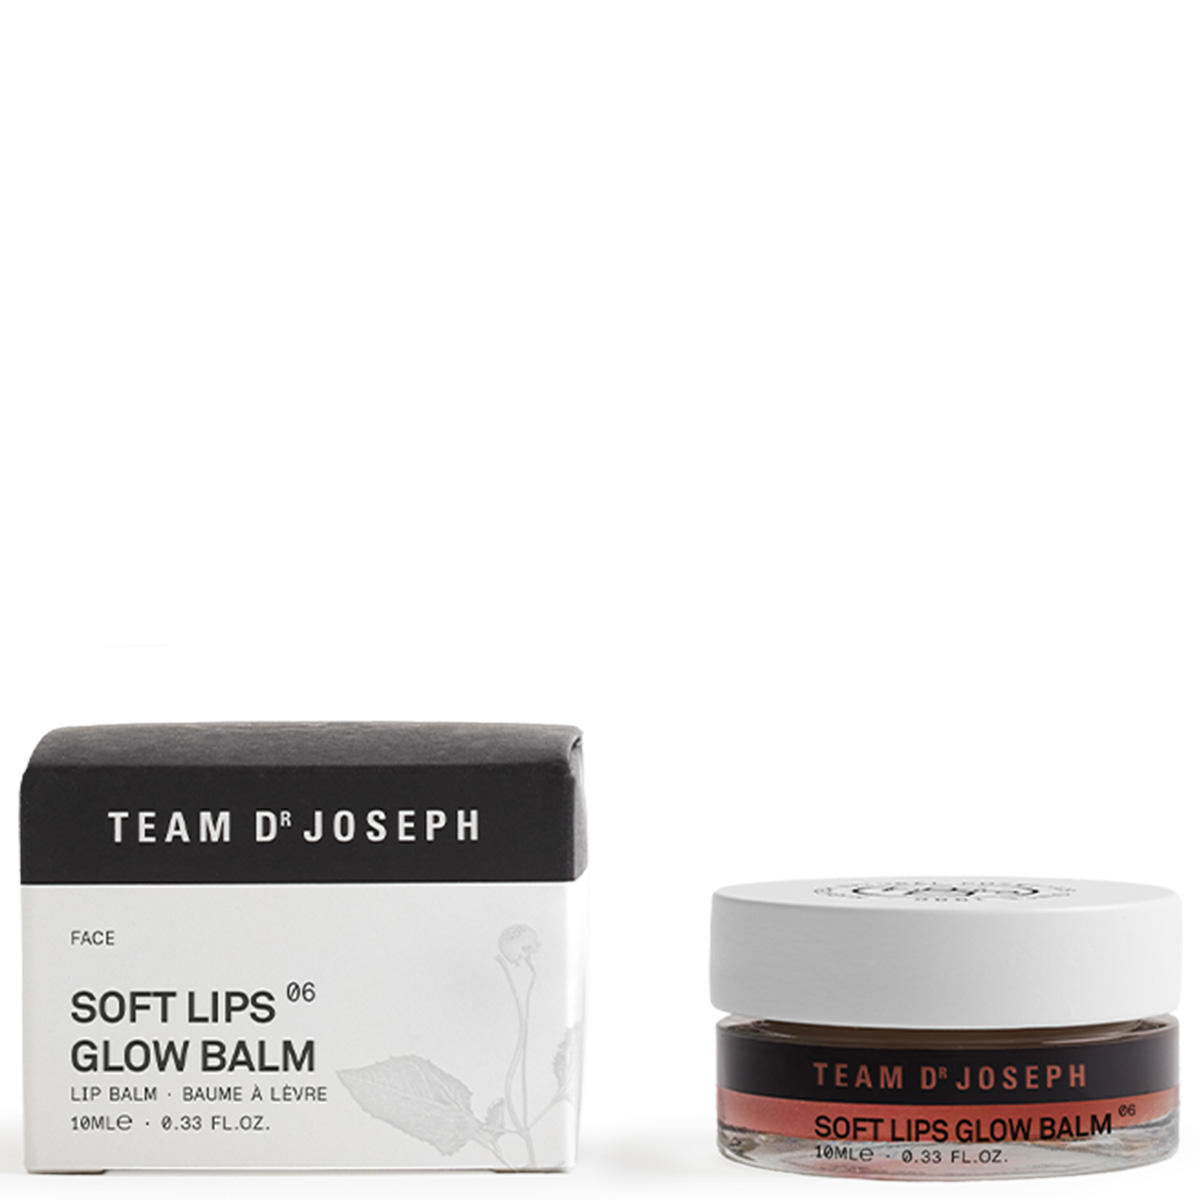 TEAM DR JOSEPH Soft Lips Glow Balm 10 ml - 2